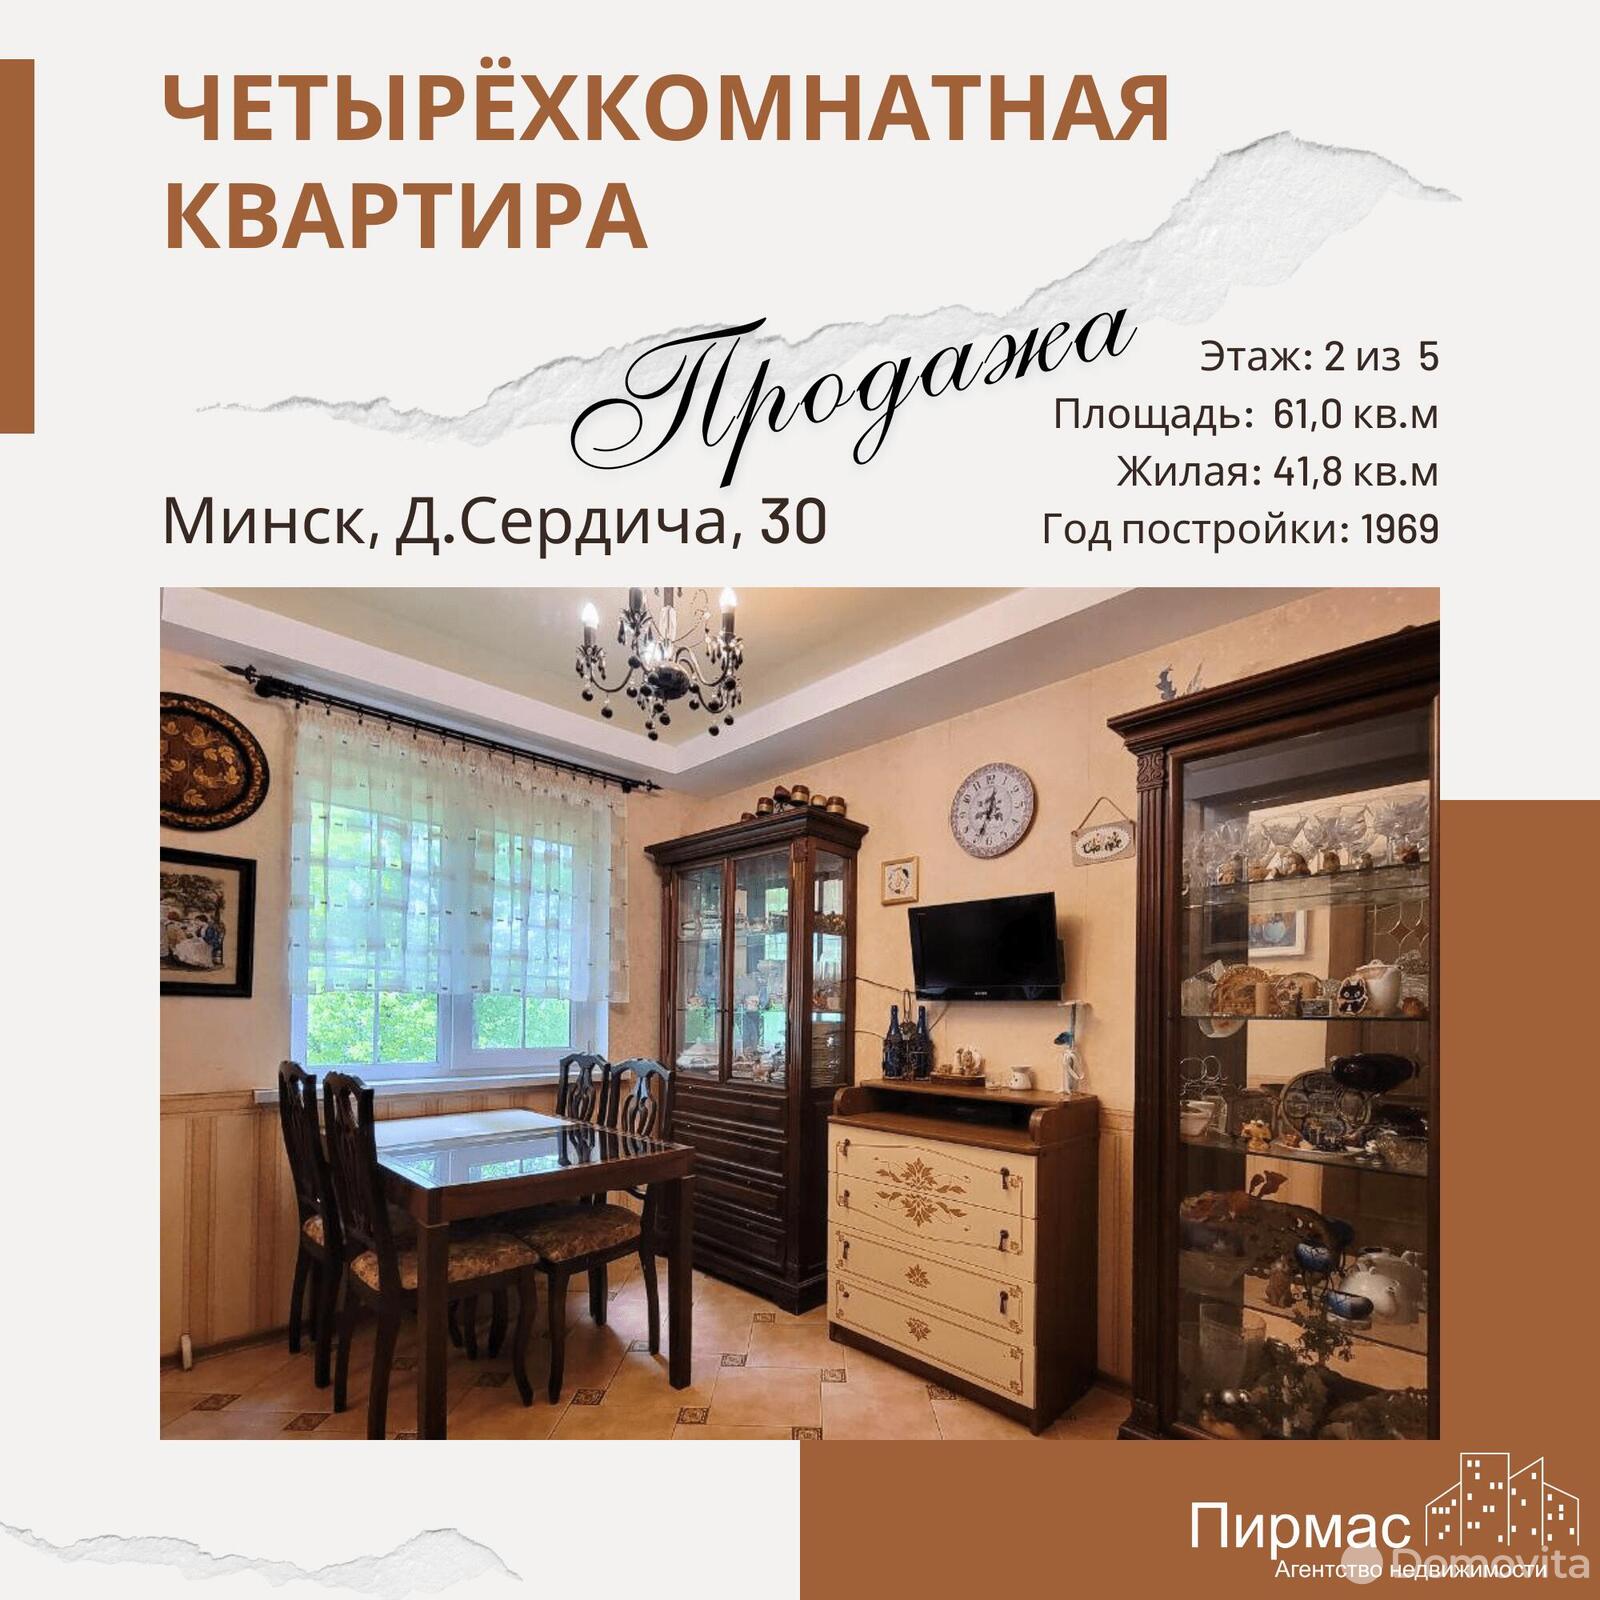 Цена продажи квартиры, Минск, ул. Данилы Сердича, д. 30